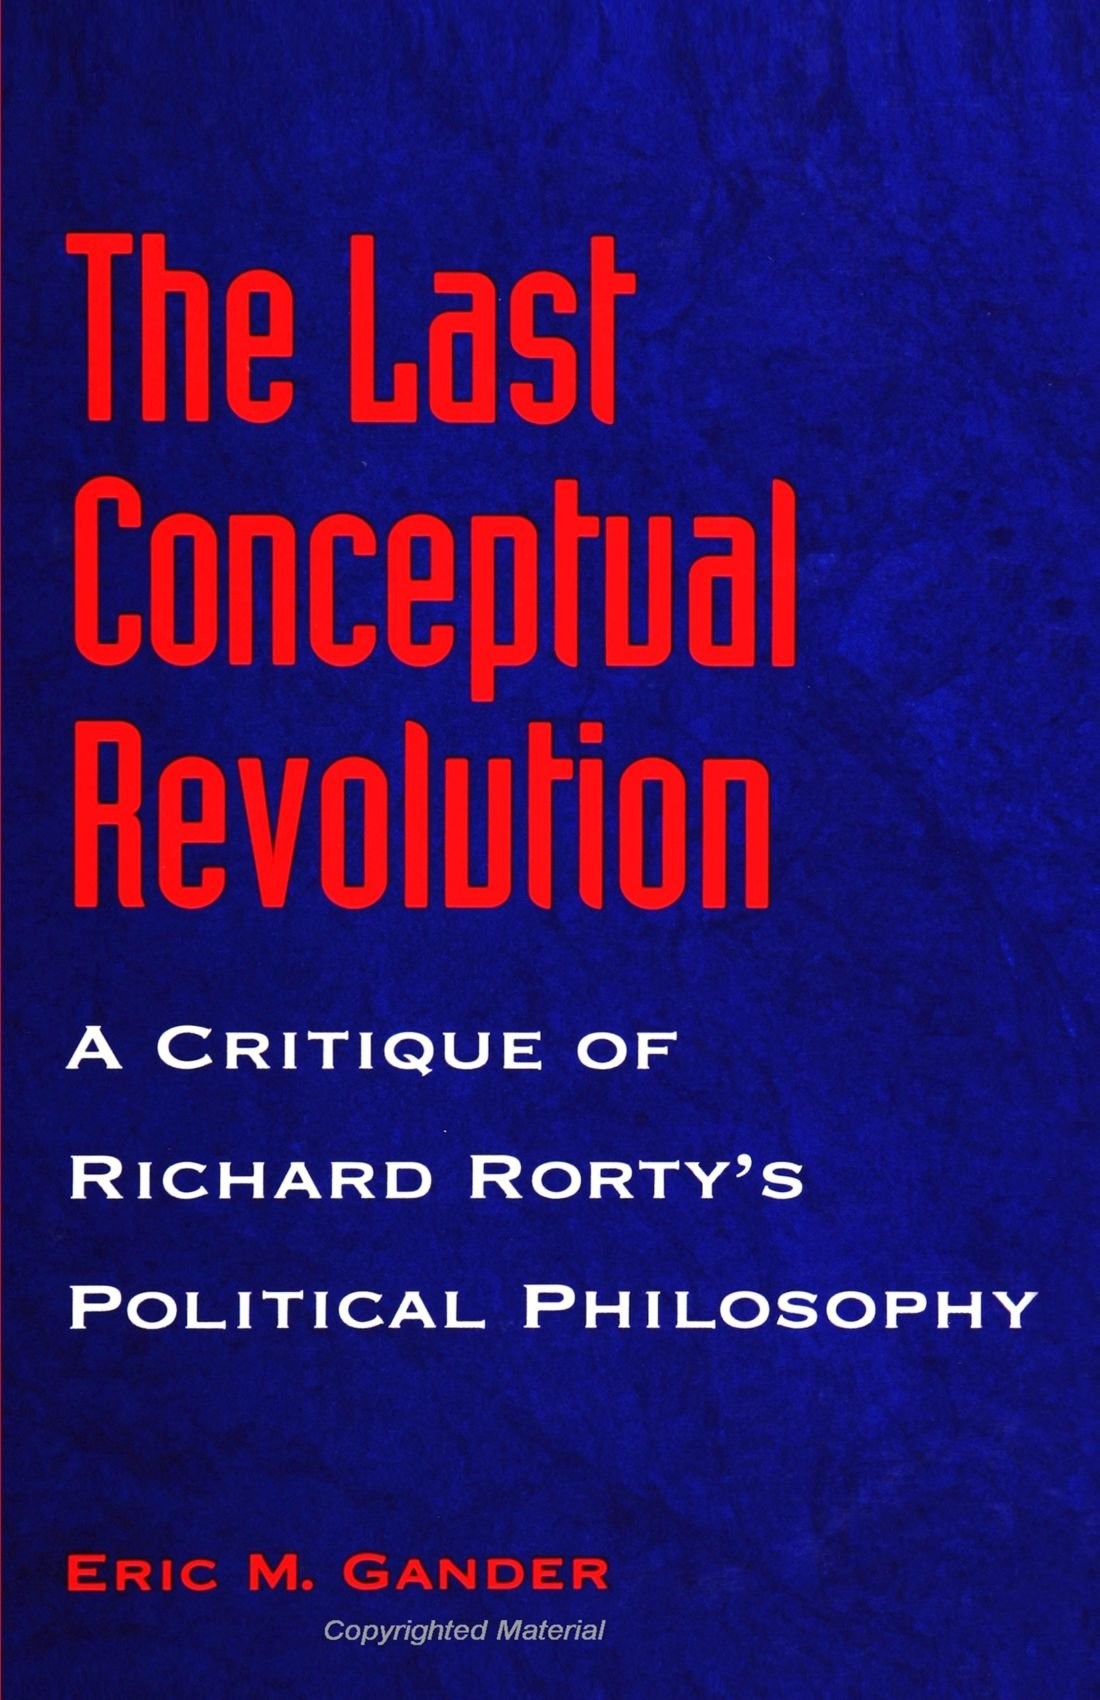 The Last Conceptual Revolution: A Critique of Richard Rorty's Political Philosophy